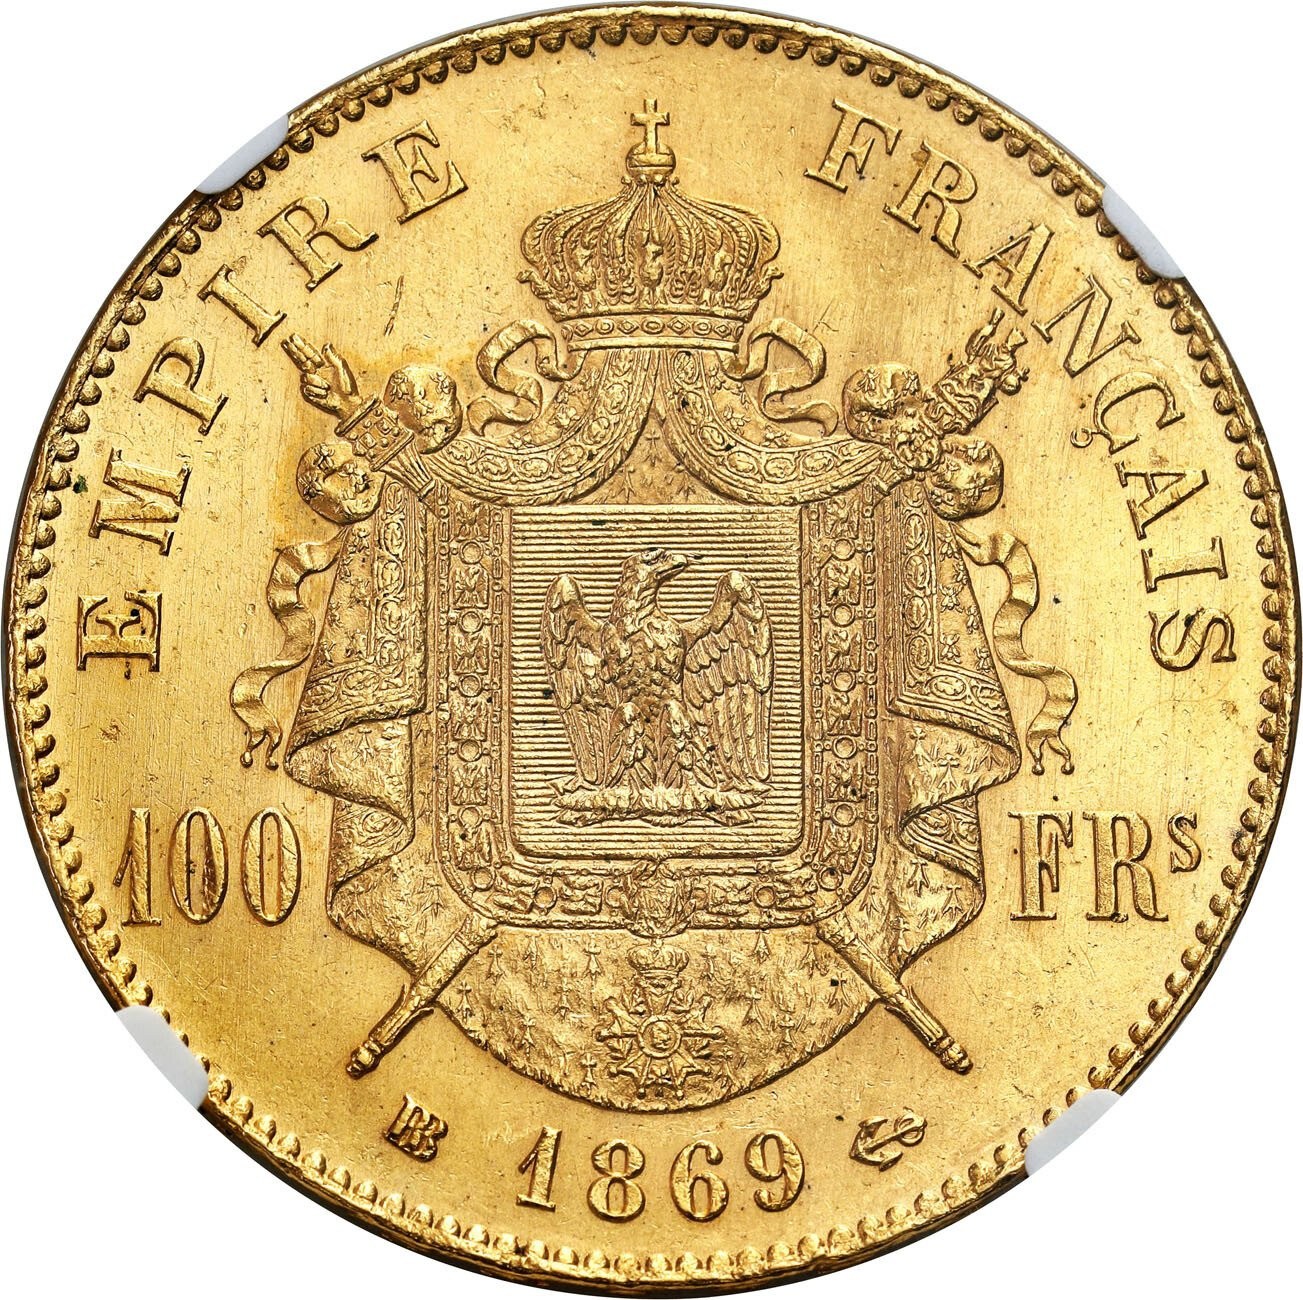 Francja, Napoleon III. 100 franków 1869 BB, Strasburg NGC MS64+ PIĘKNE